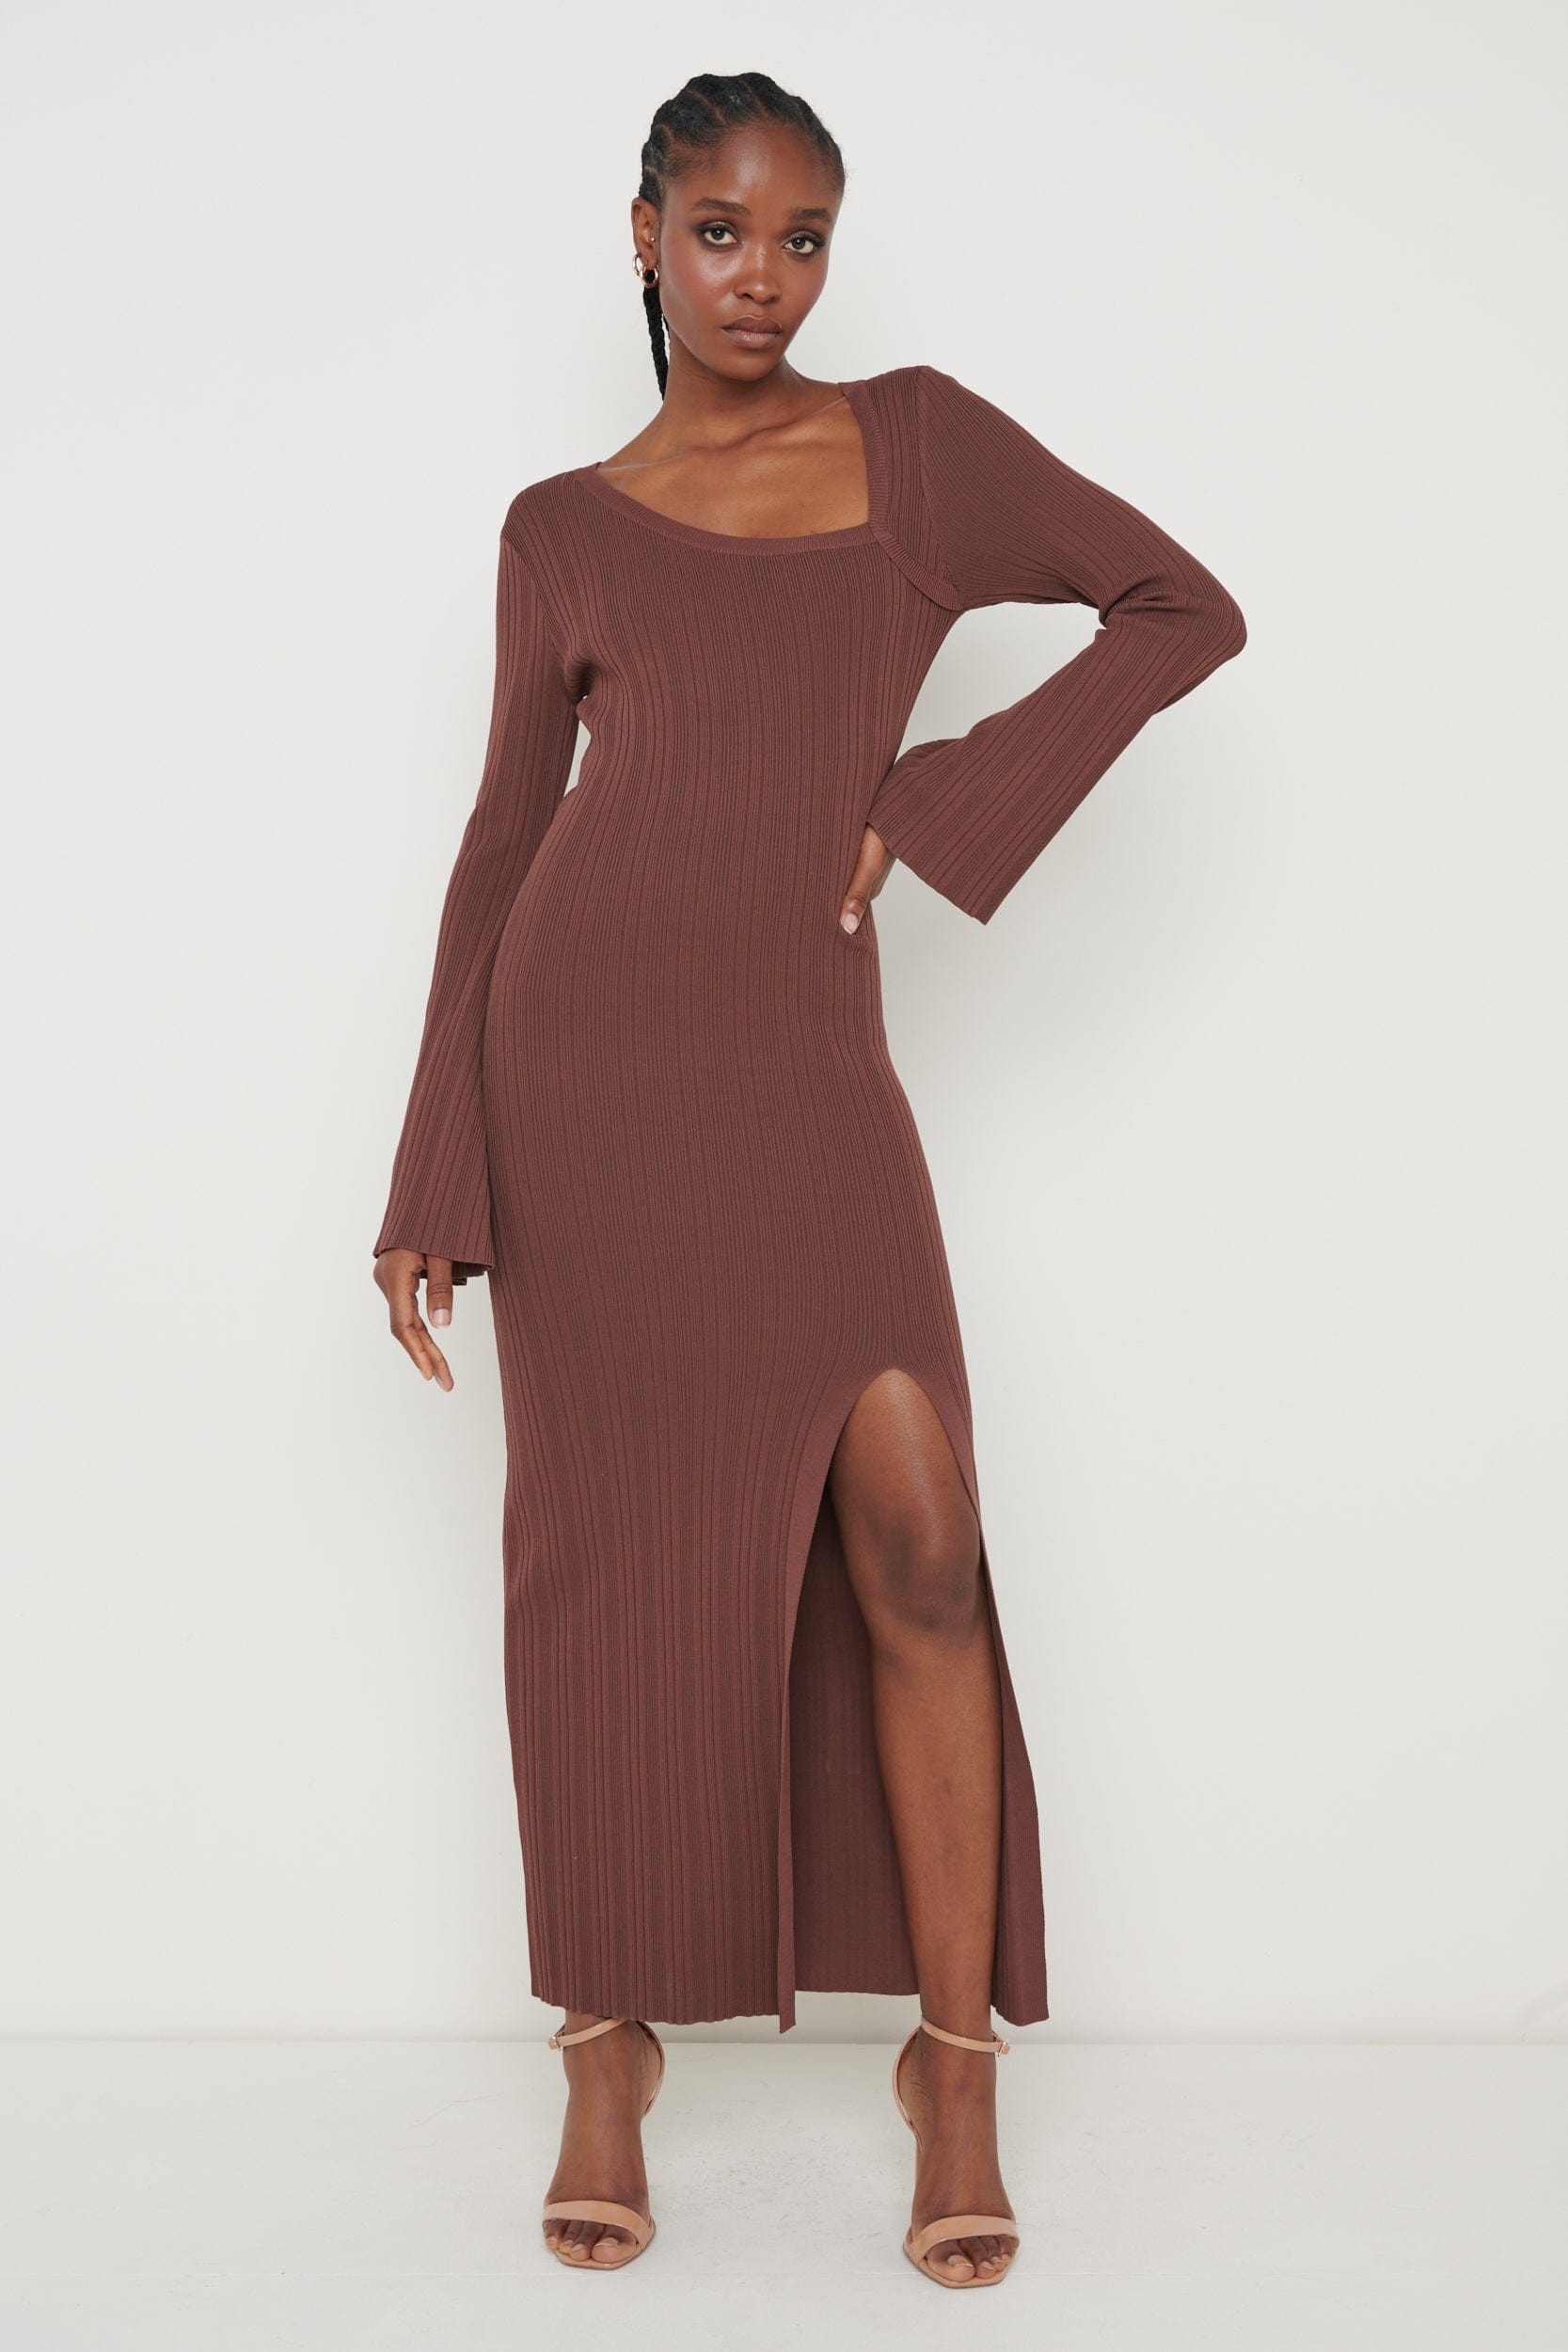 Emmie Cut Out Knit Midaxi Dress - Chocolate Brown, XXL